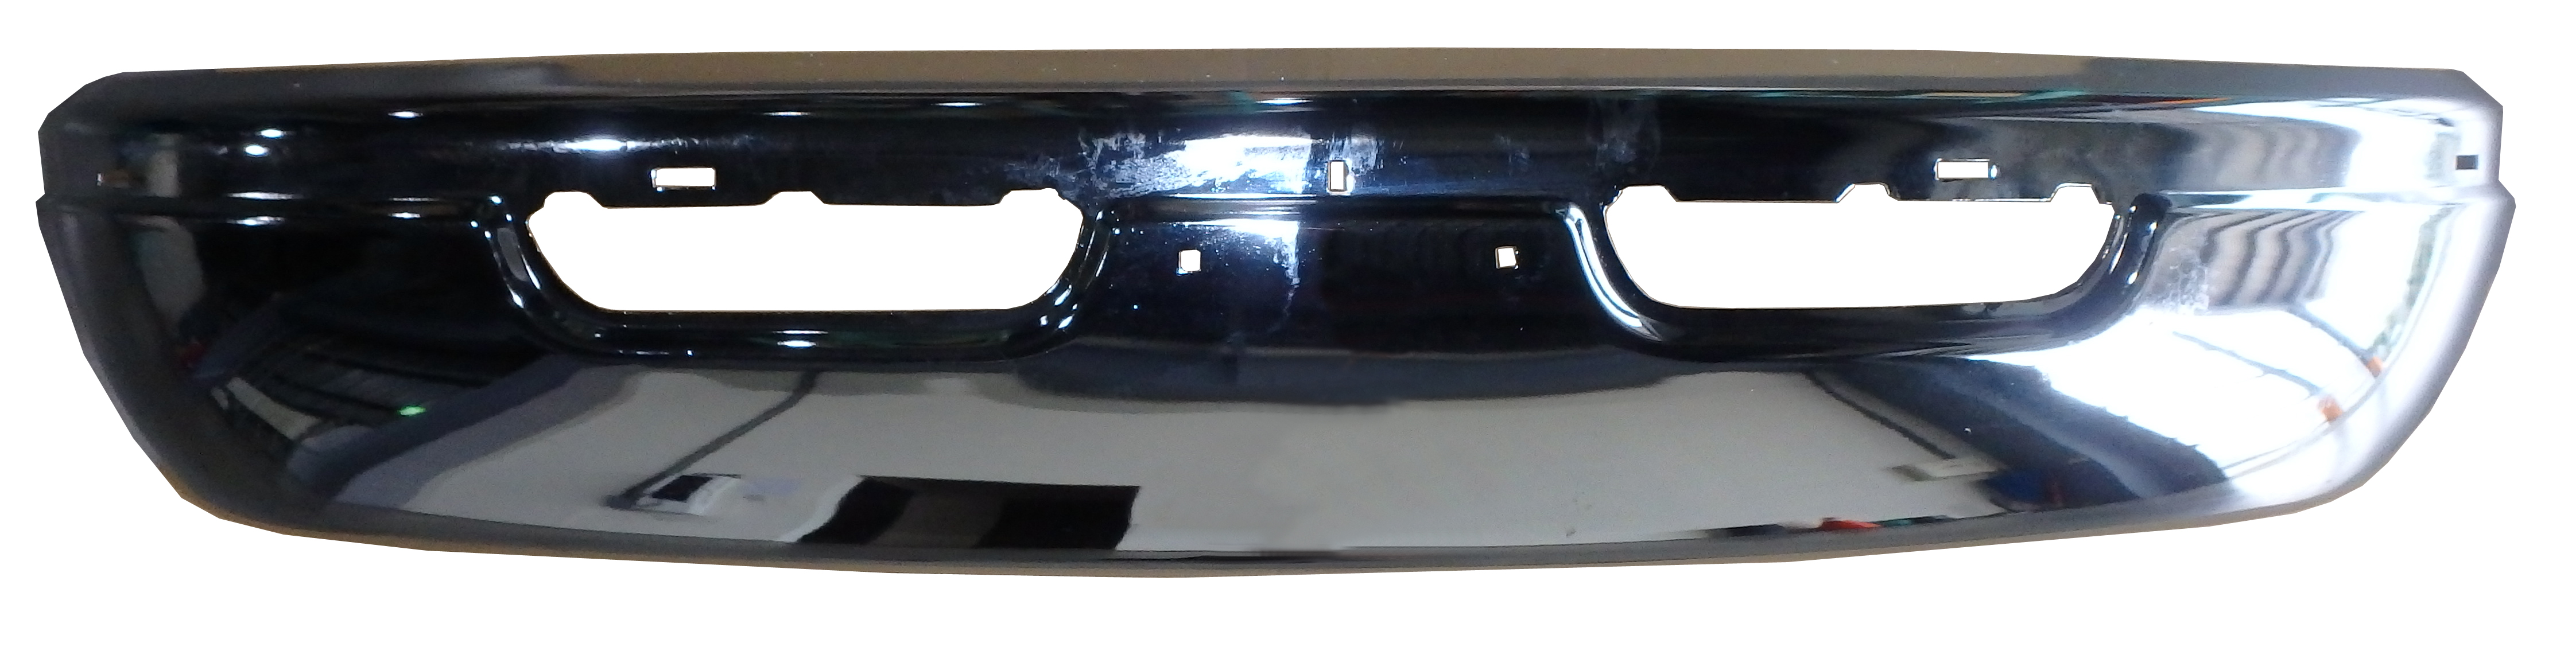 Aftermarket METAL FRONT BUMPERS for DODGE - B1500, B1500,98-98,Front bumper face bar